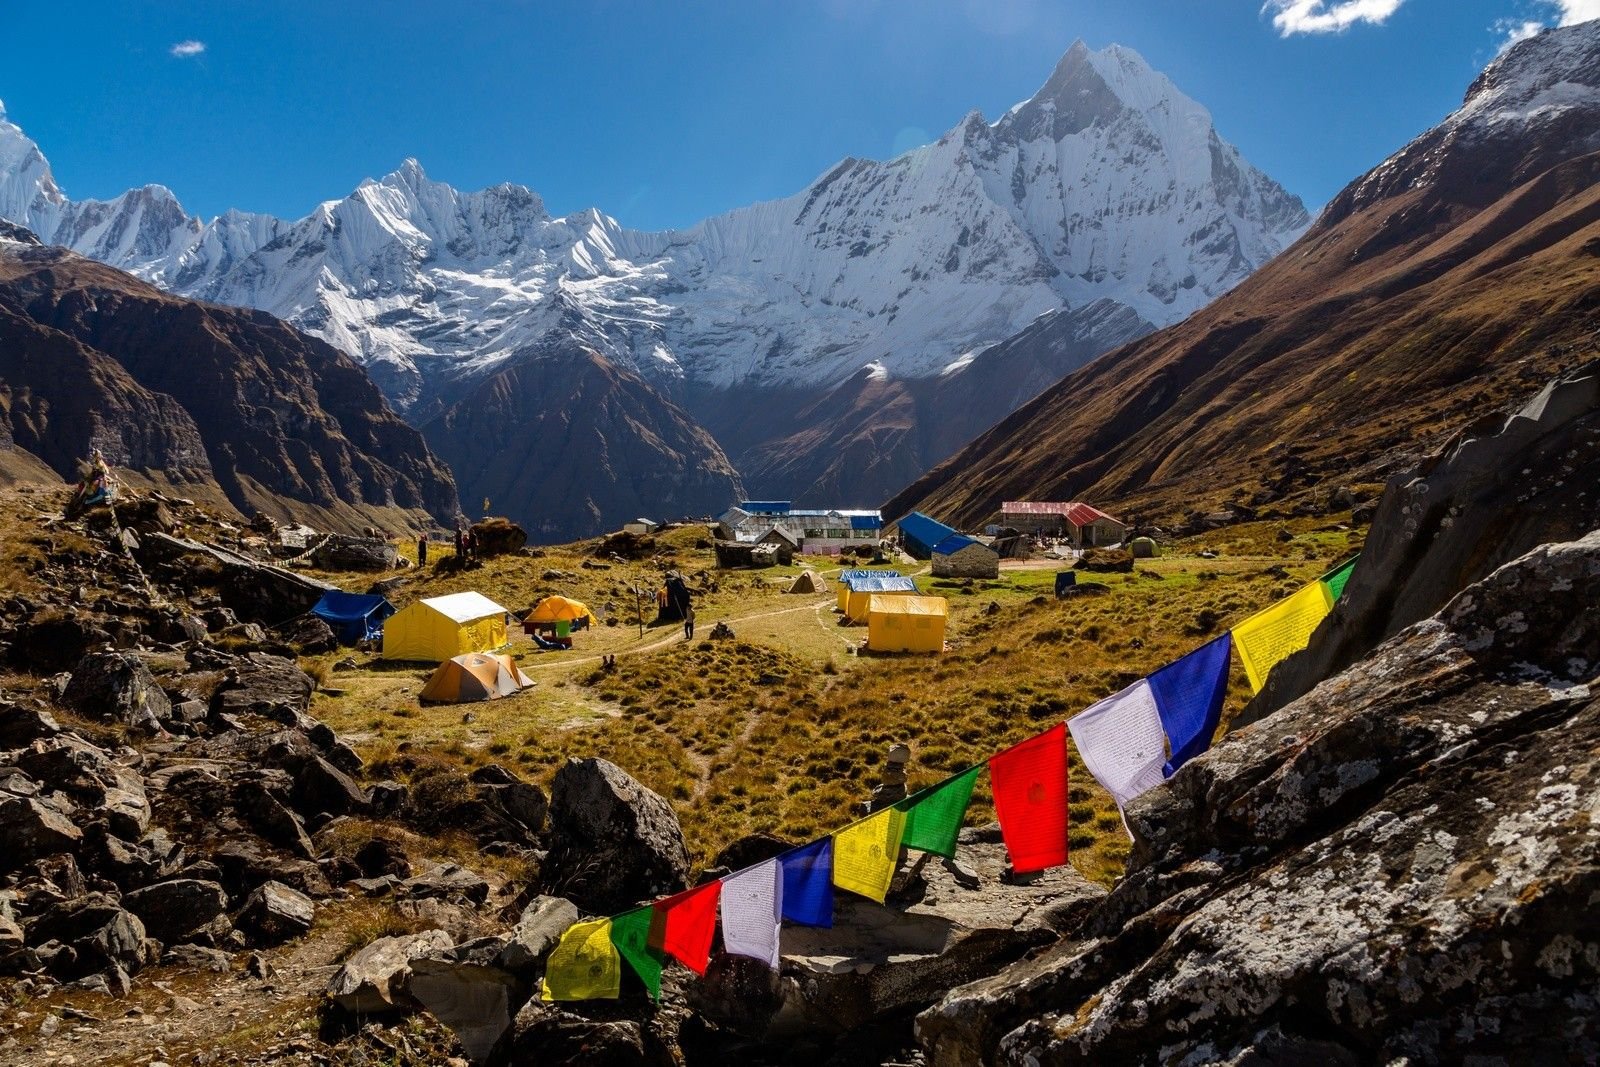 Annapurna Sanctuary Trek or Annapurna Circuit Trek? | A Guide